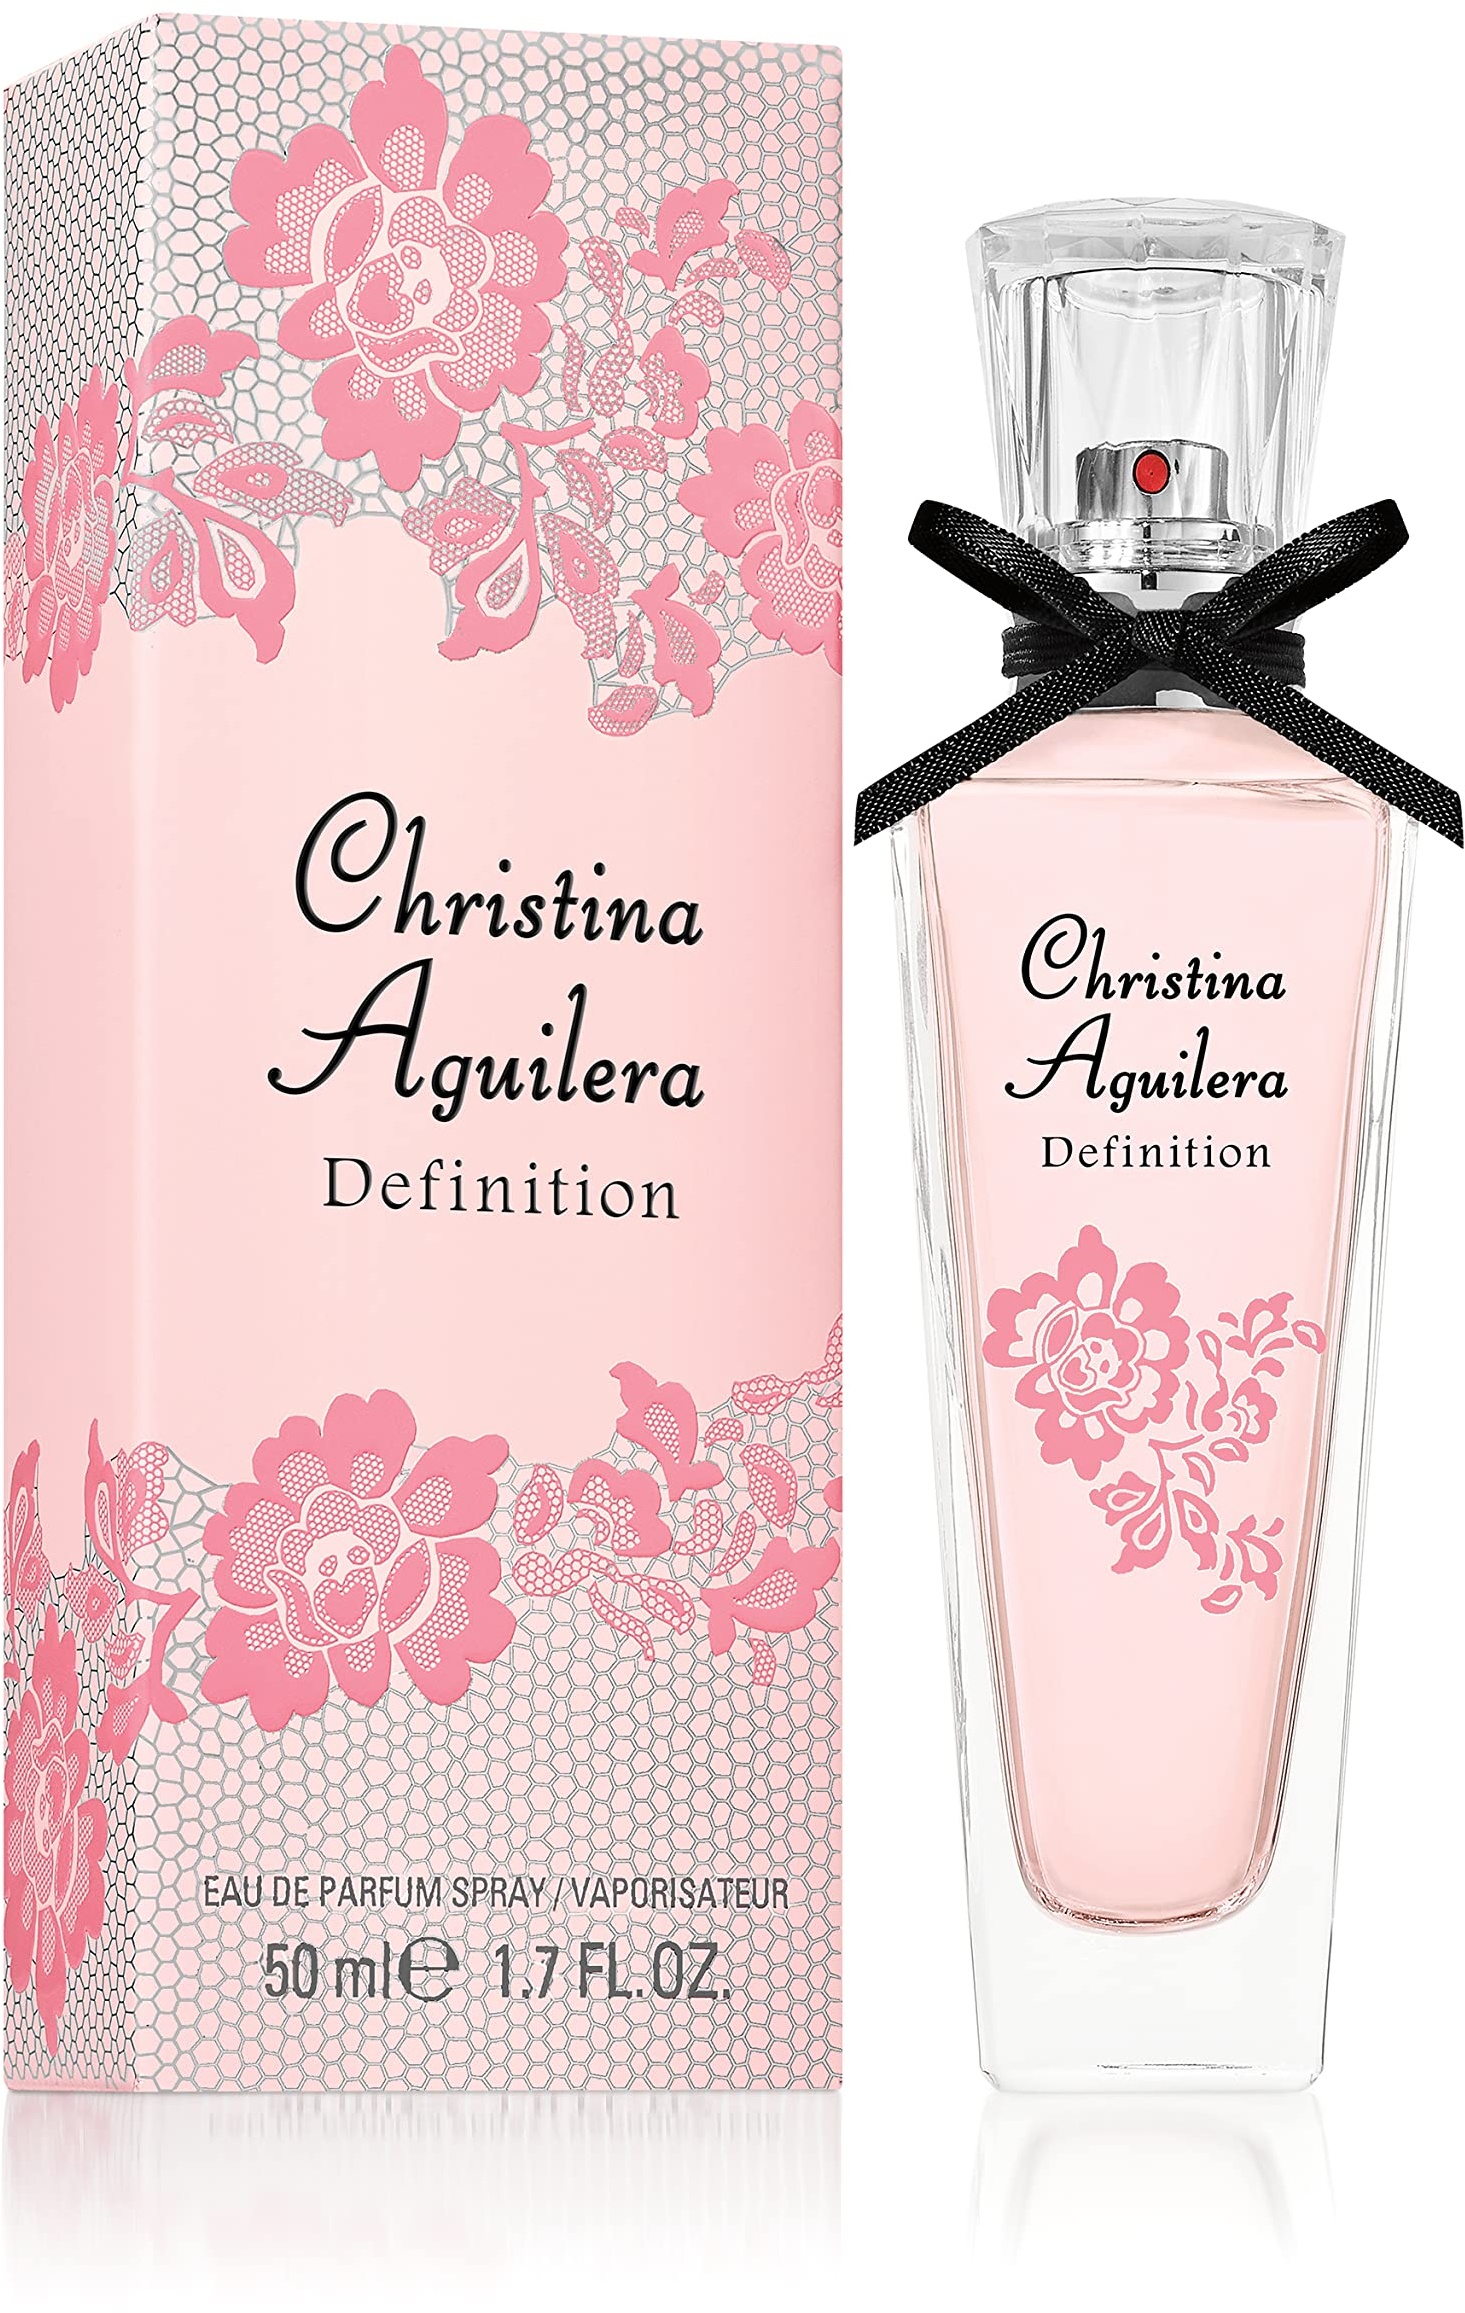 Christina Aguilera Definition Eau de Parfum, 50 ml